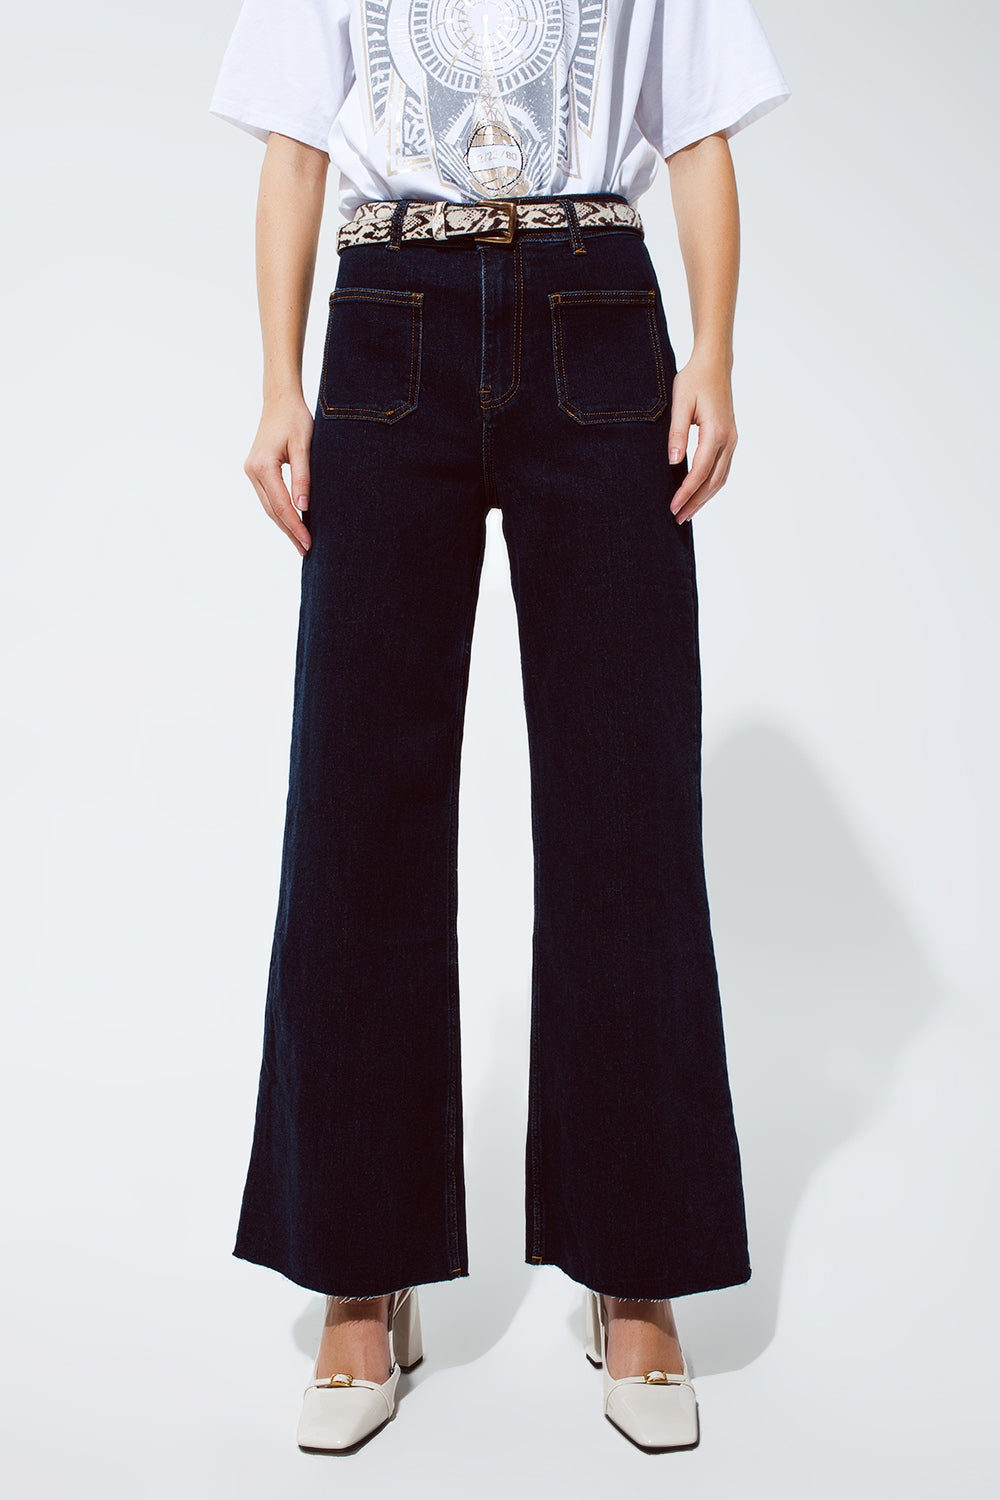 Q2 Straight Jeans With Pocket Detail In Dark Wash